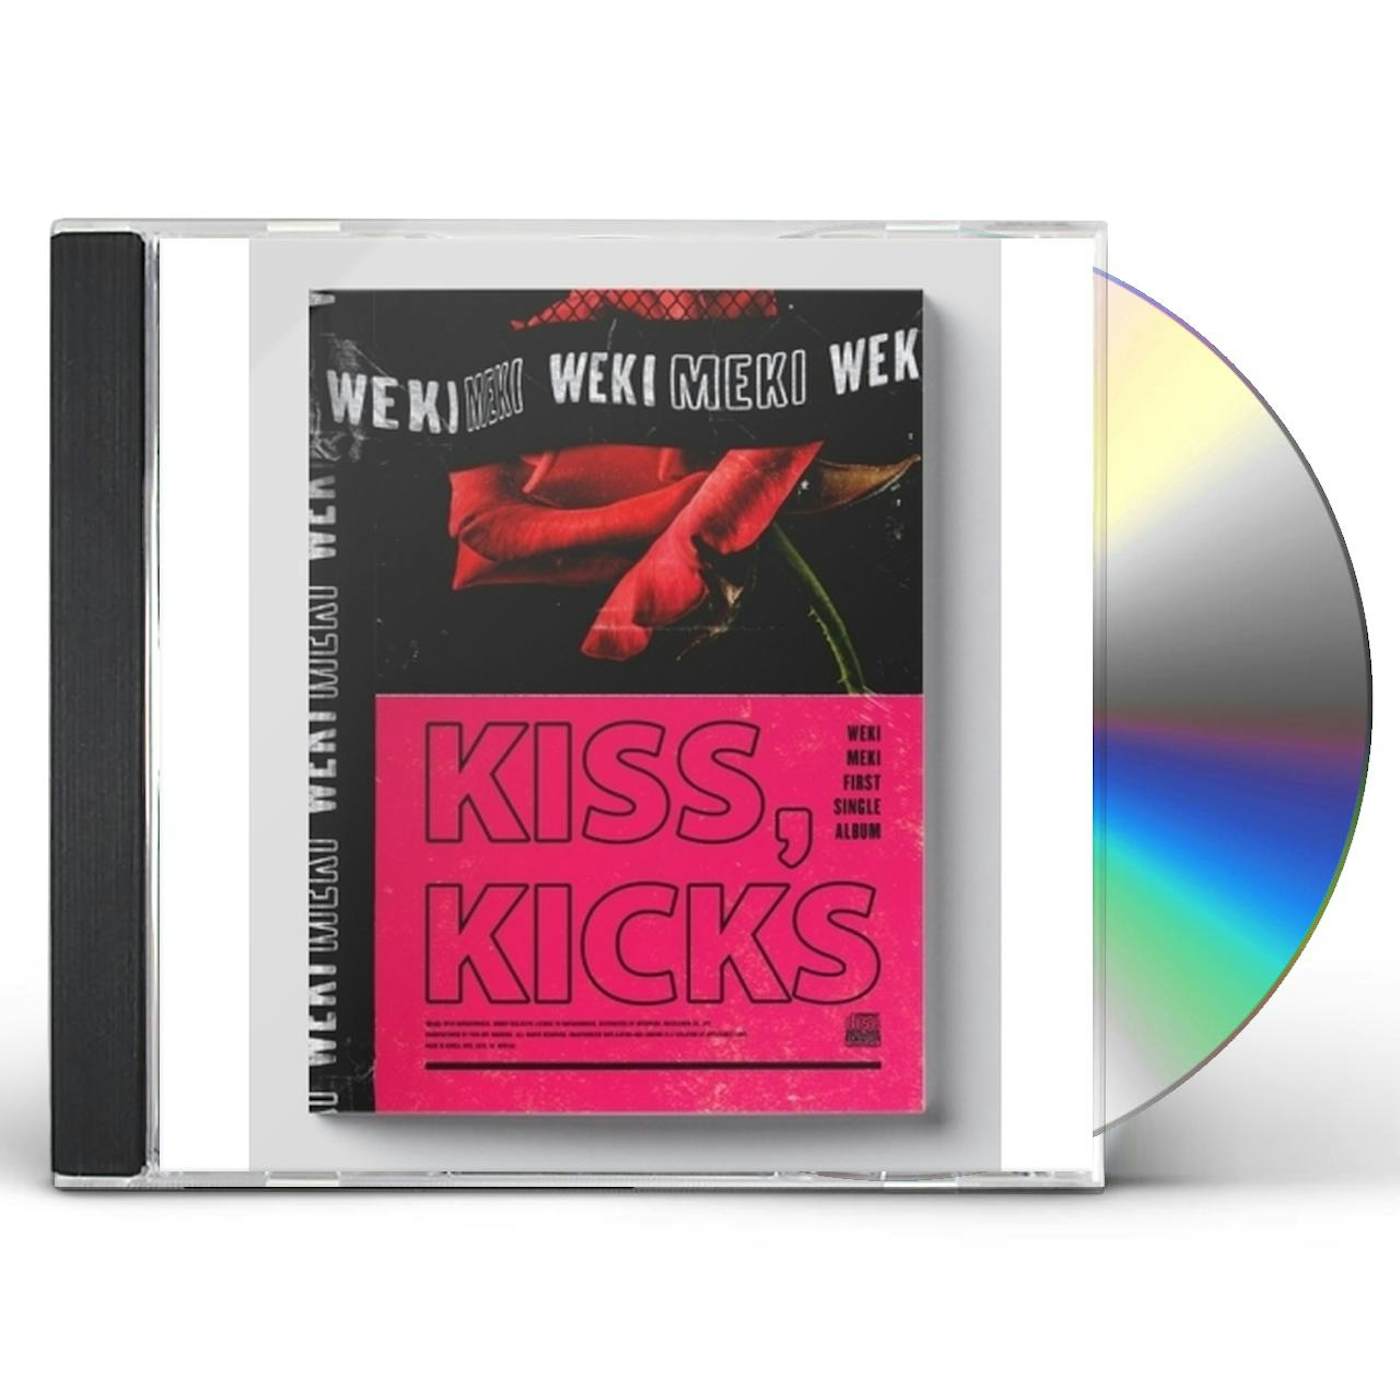 Weki Meki KISS KICKS (KISS VERSION) CD